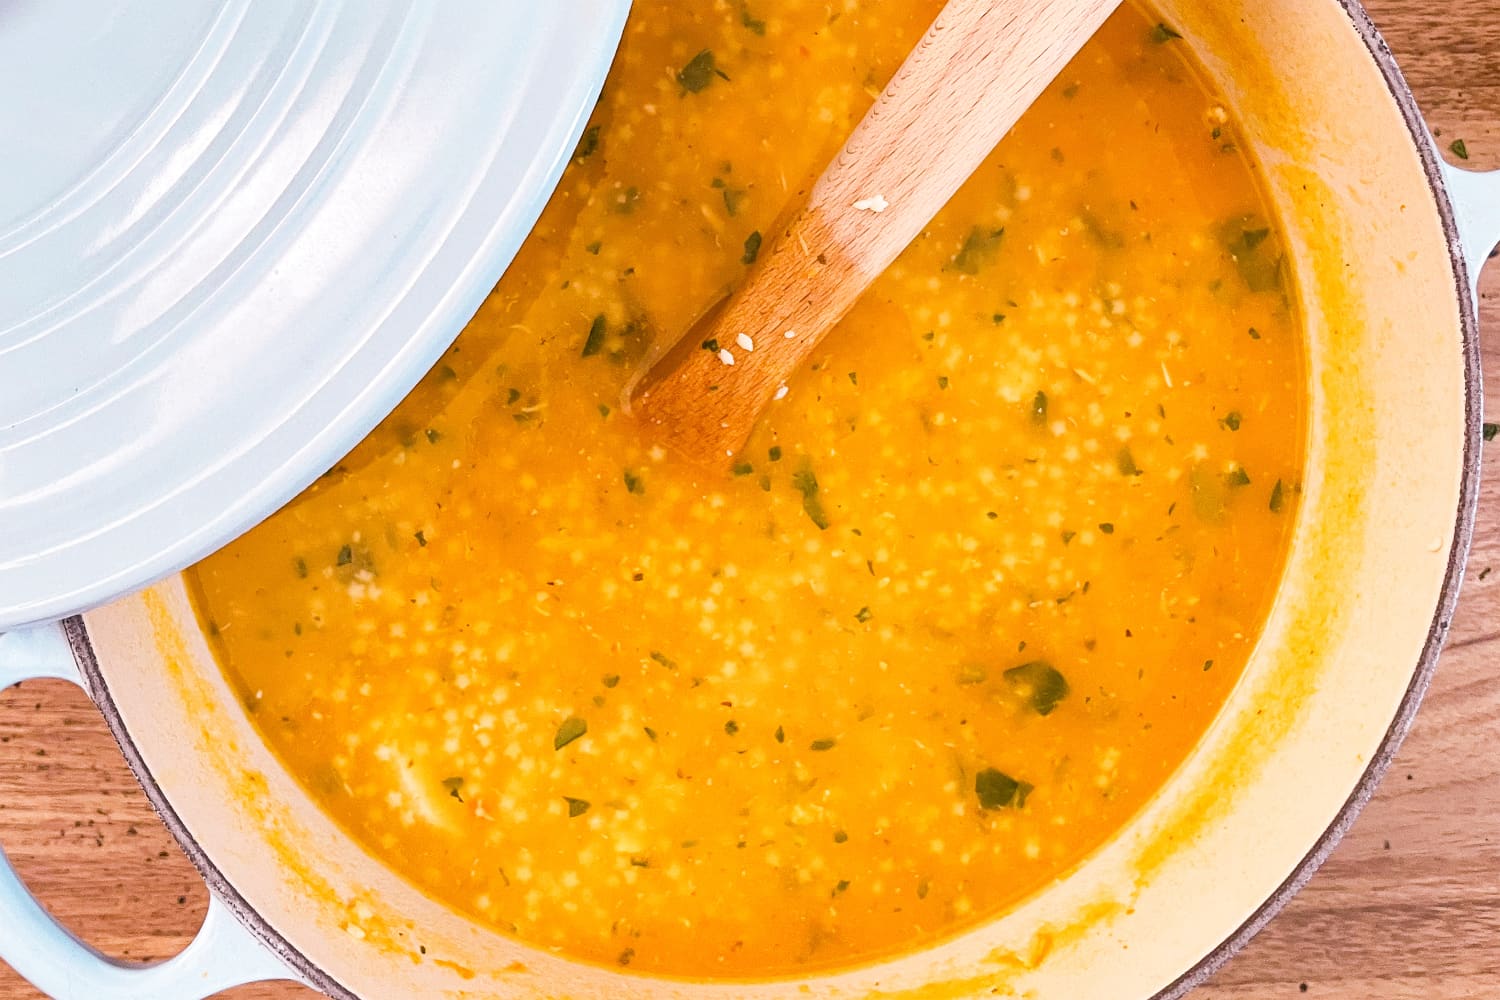 I tried this Italian grandmother’s legendary “penicillin soup”.